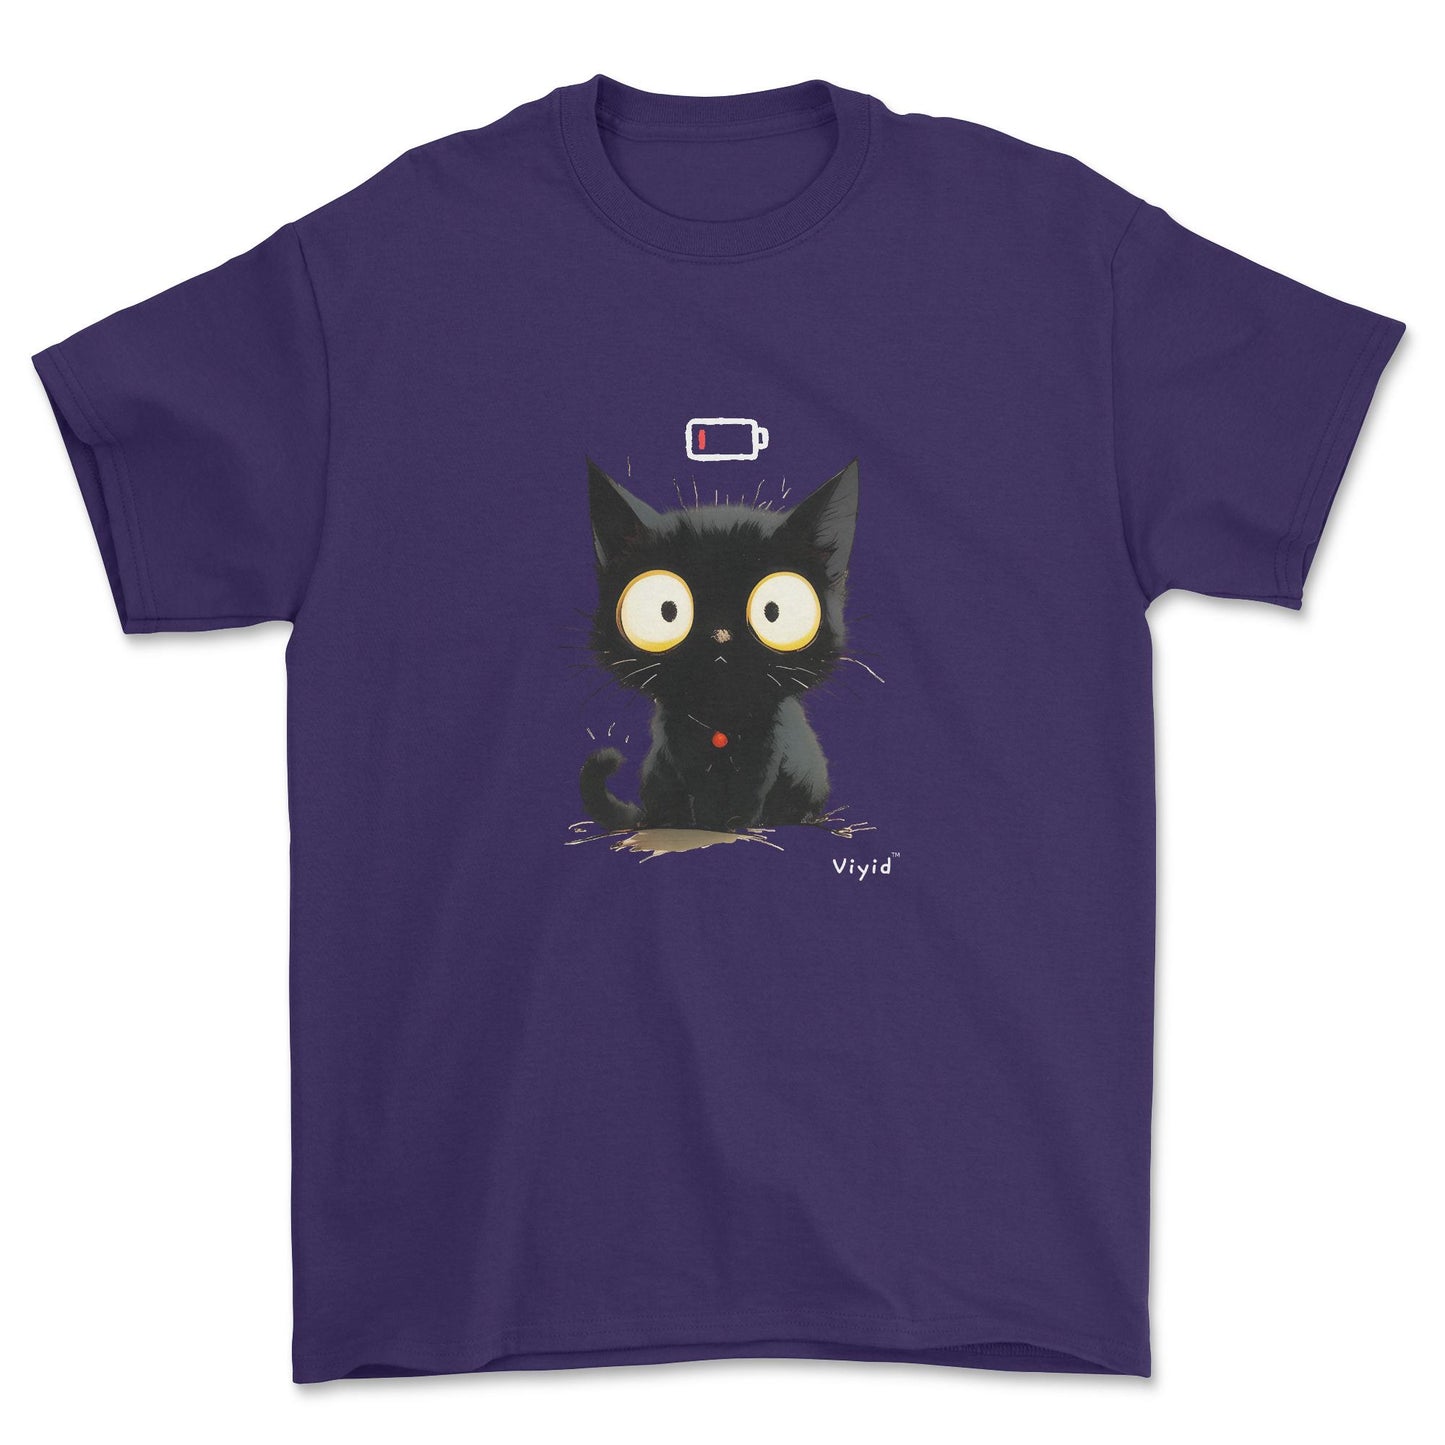 Low battery black cat youth t-shirt purple